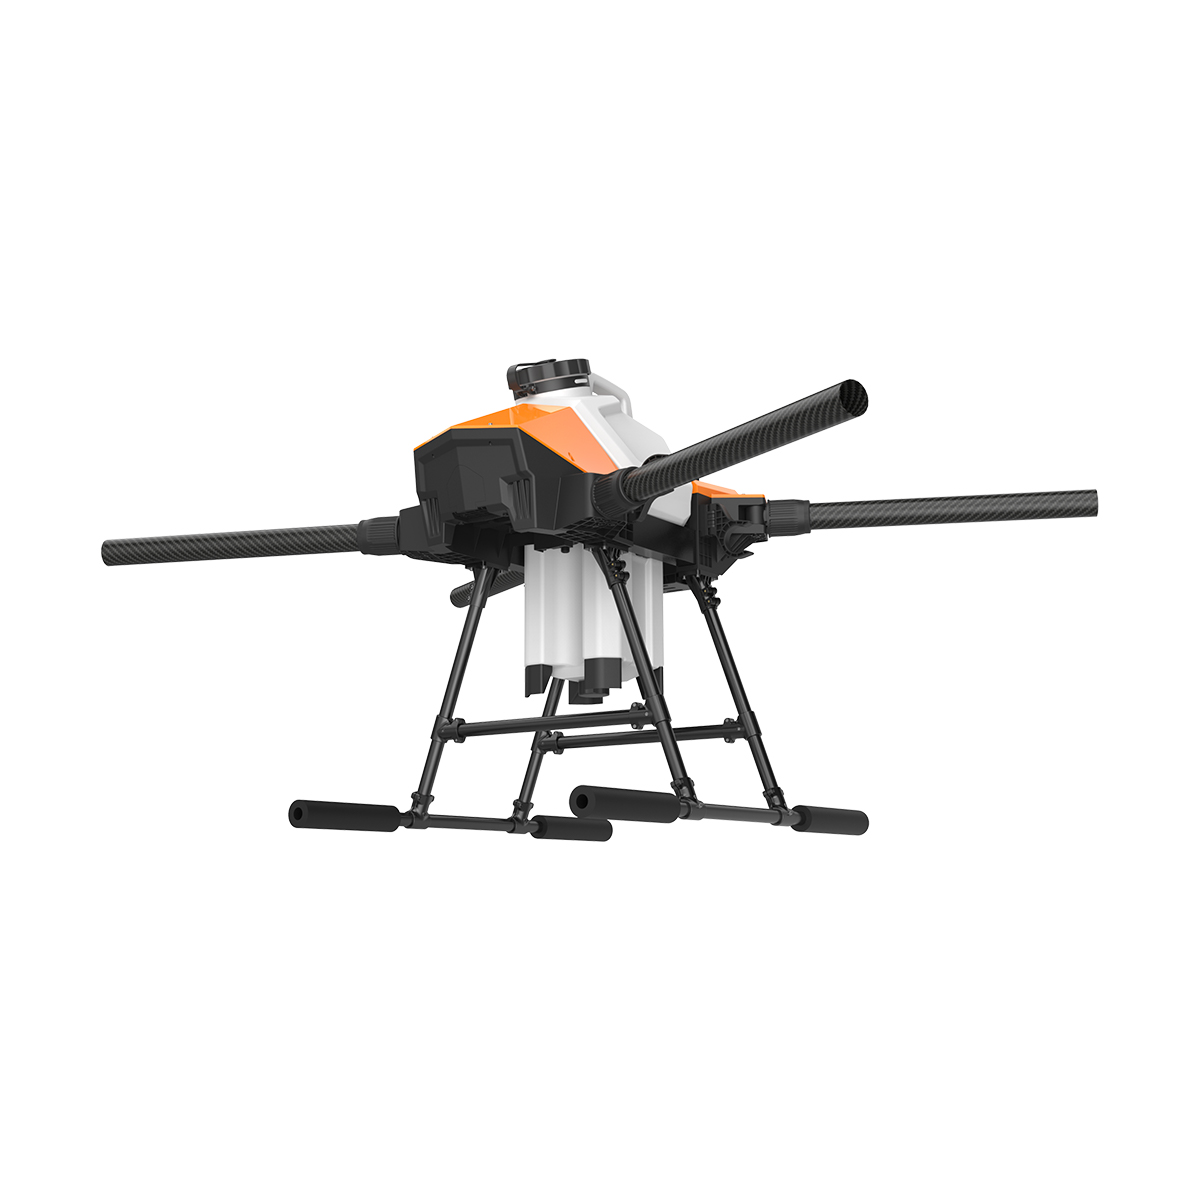 FT G410: Spray Drone Kit